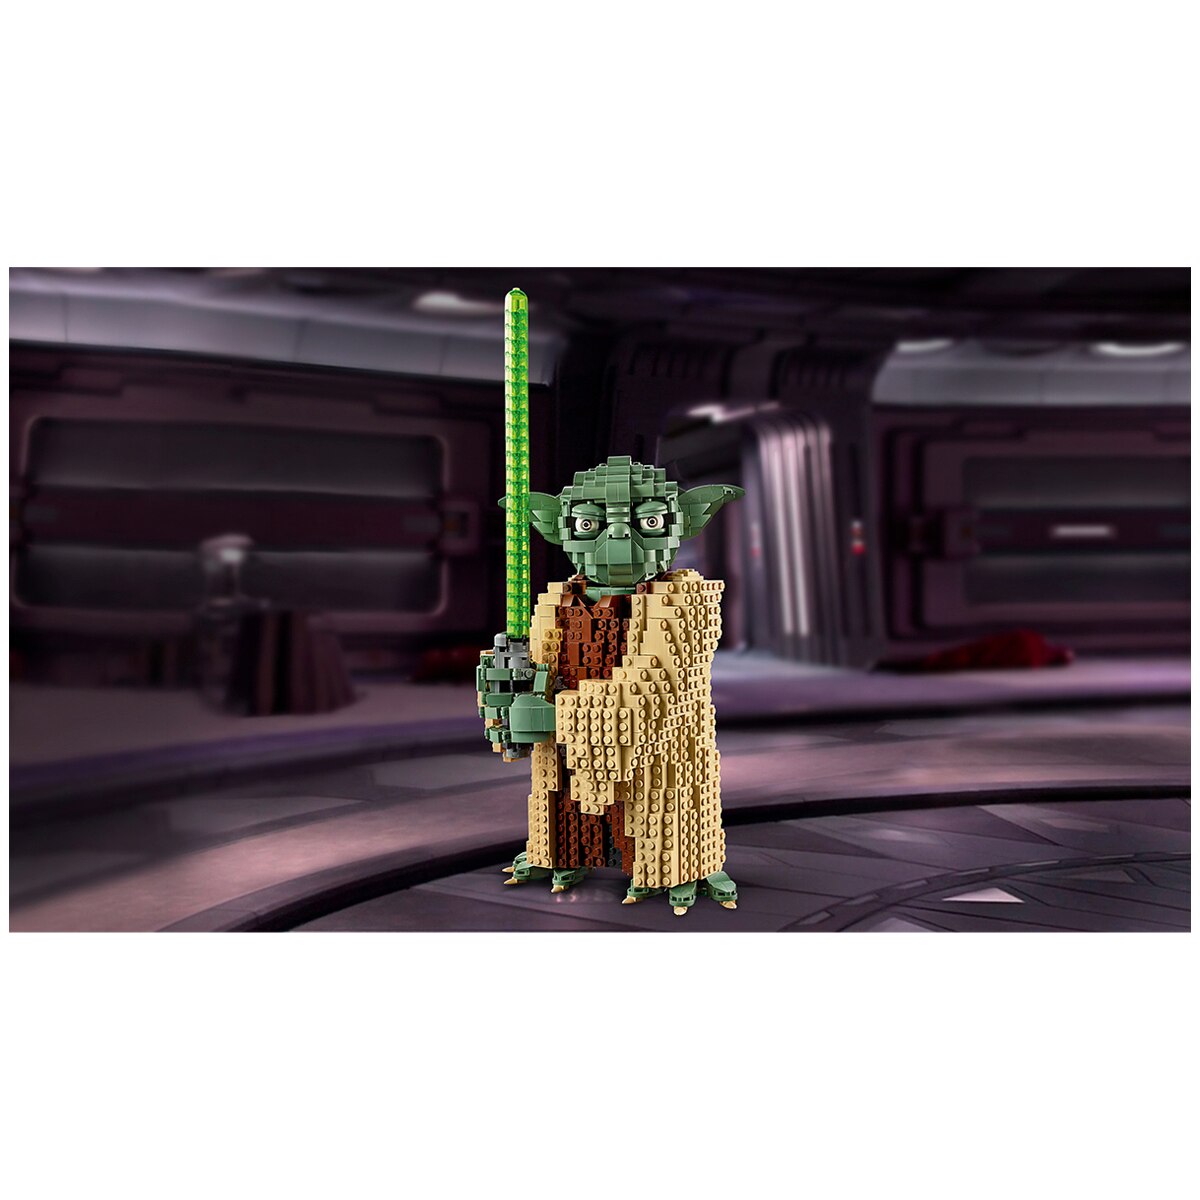 Lego Star Wars Yoda 75255